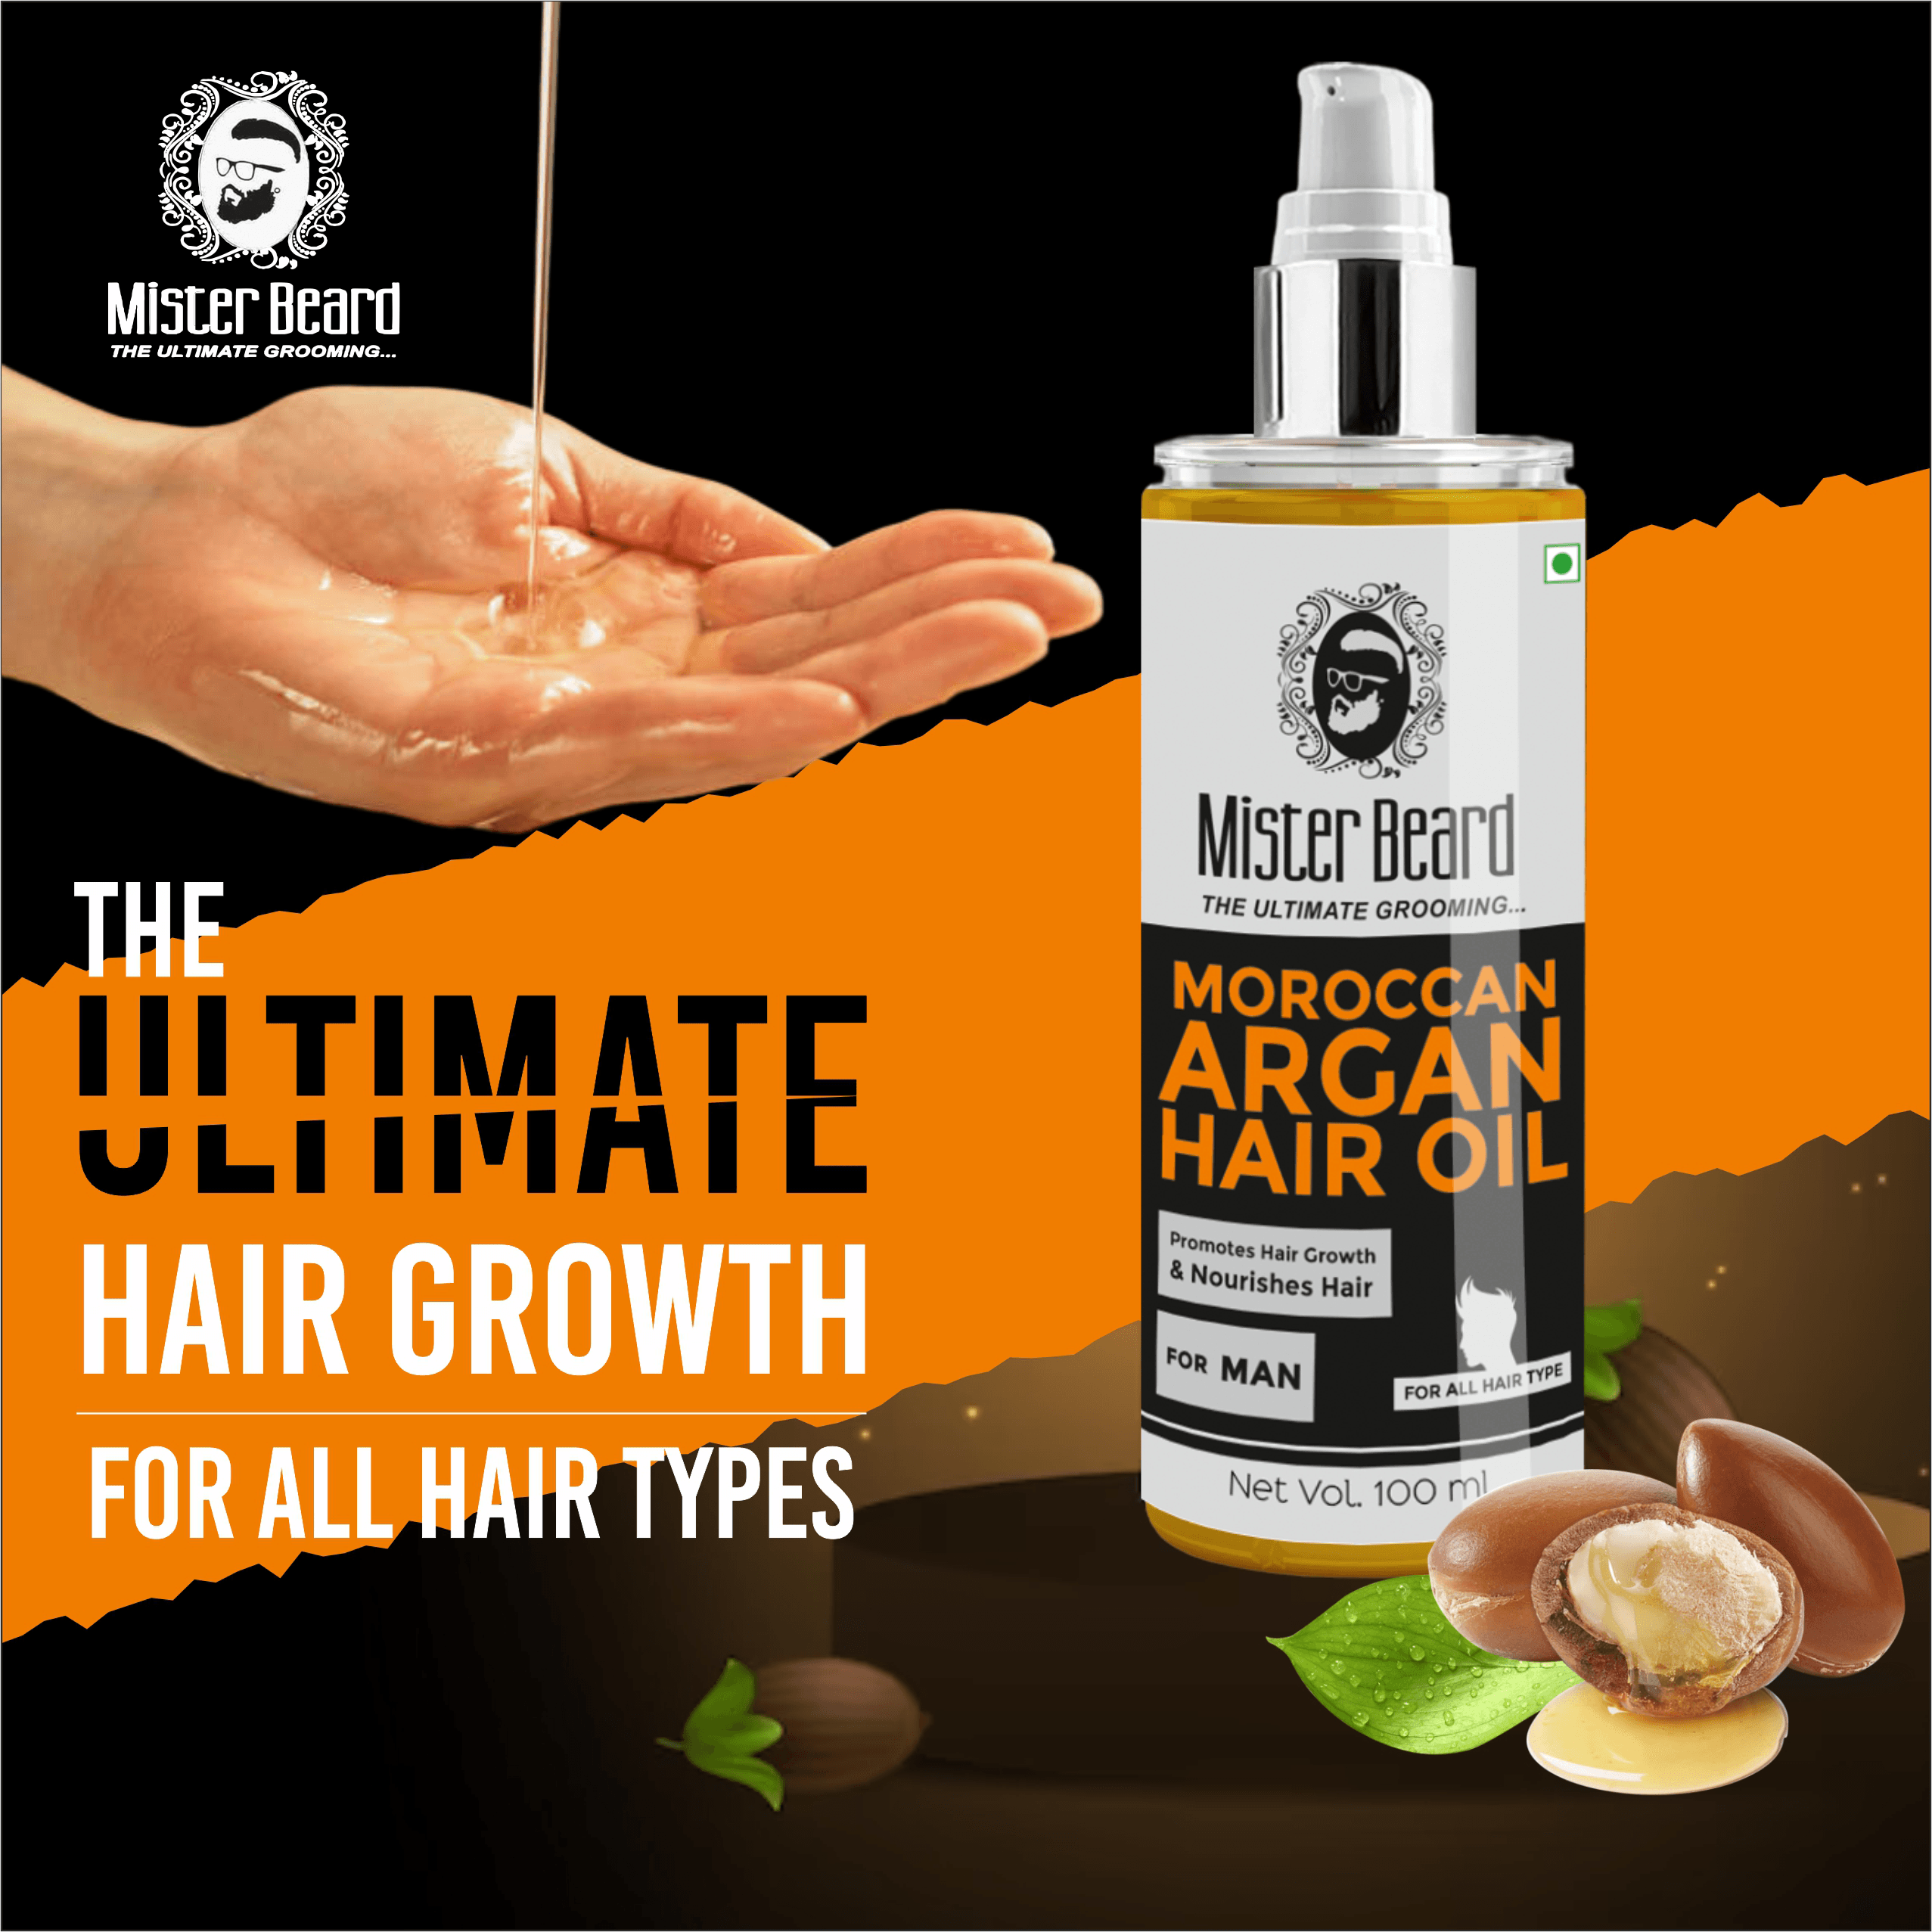 Mister Beard Moroccan Argan Hair Oil, Promotes Hair Growth, Hair-Fall Control ,100ml - Pink Root